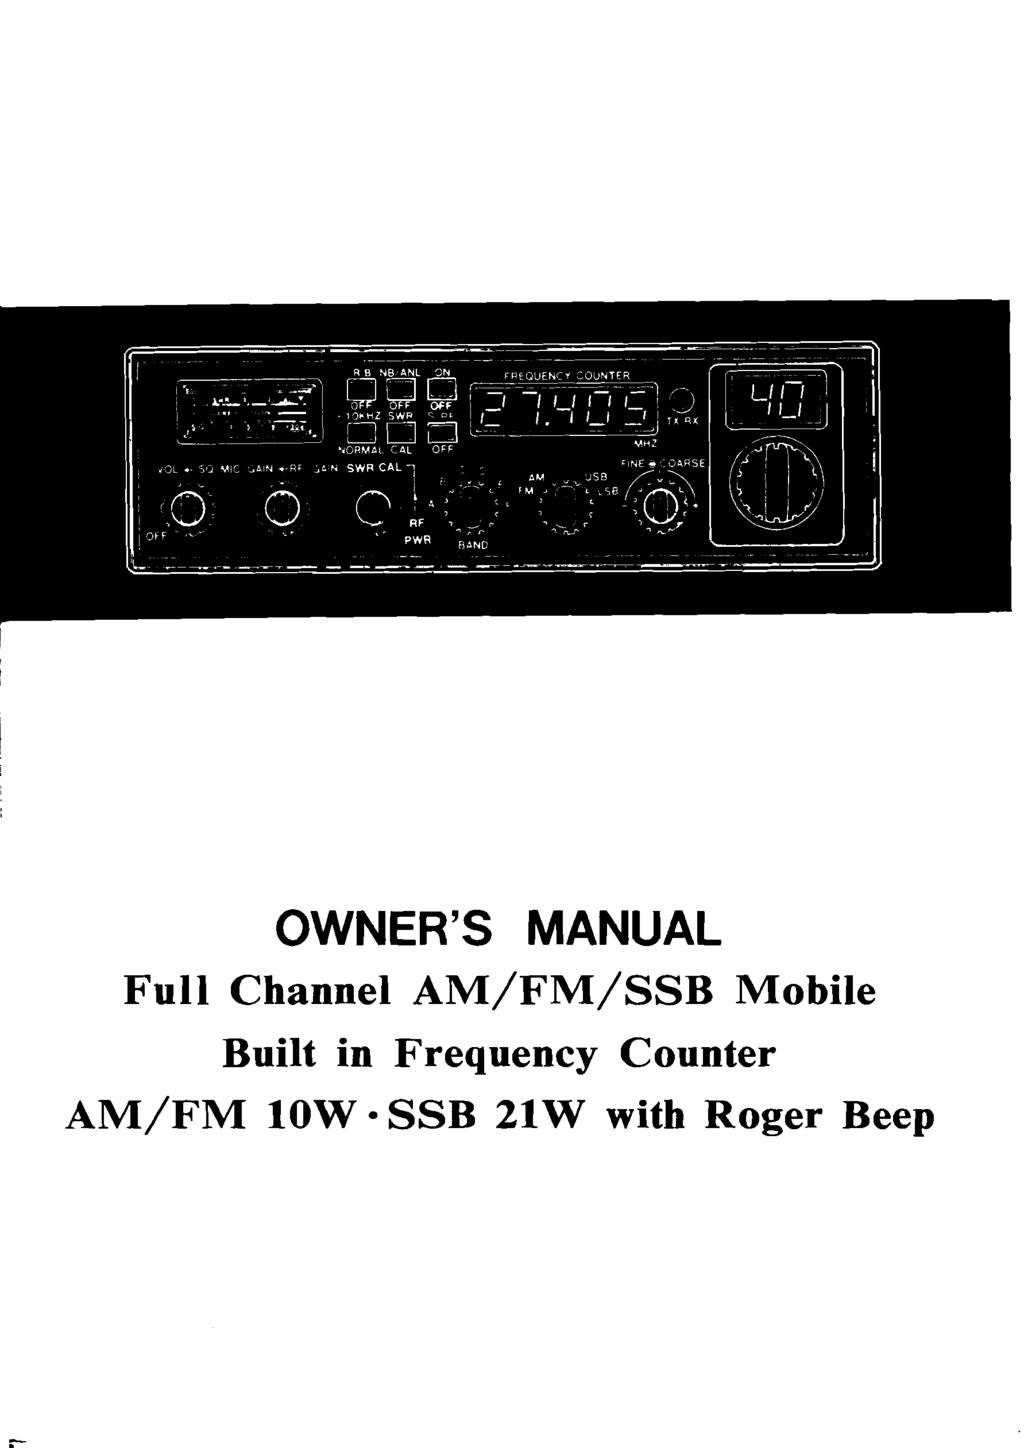 OWNER'S MANUAL Full Channel AM/FM/SSB Mobile Built